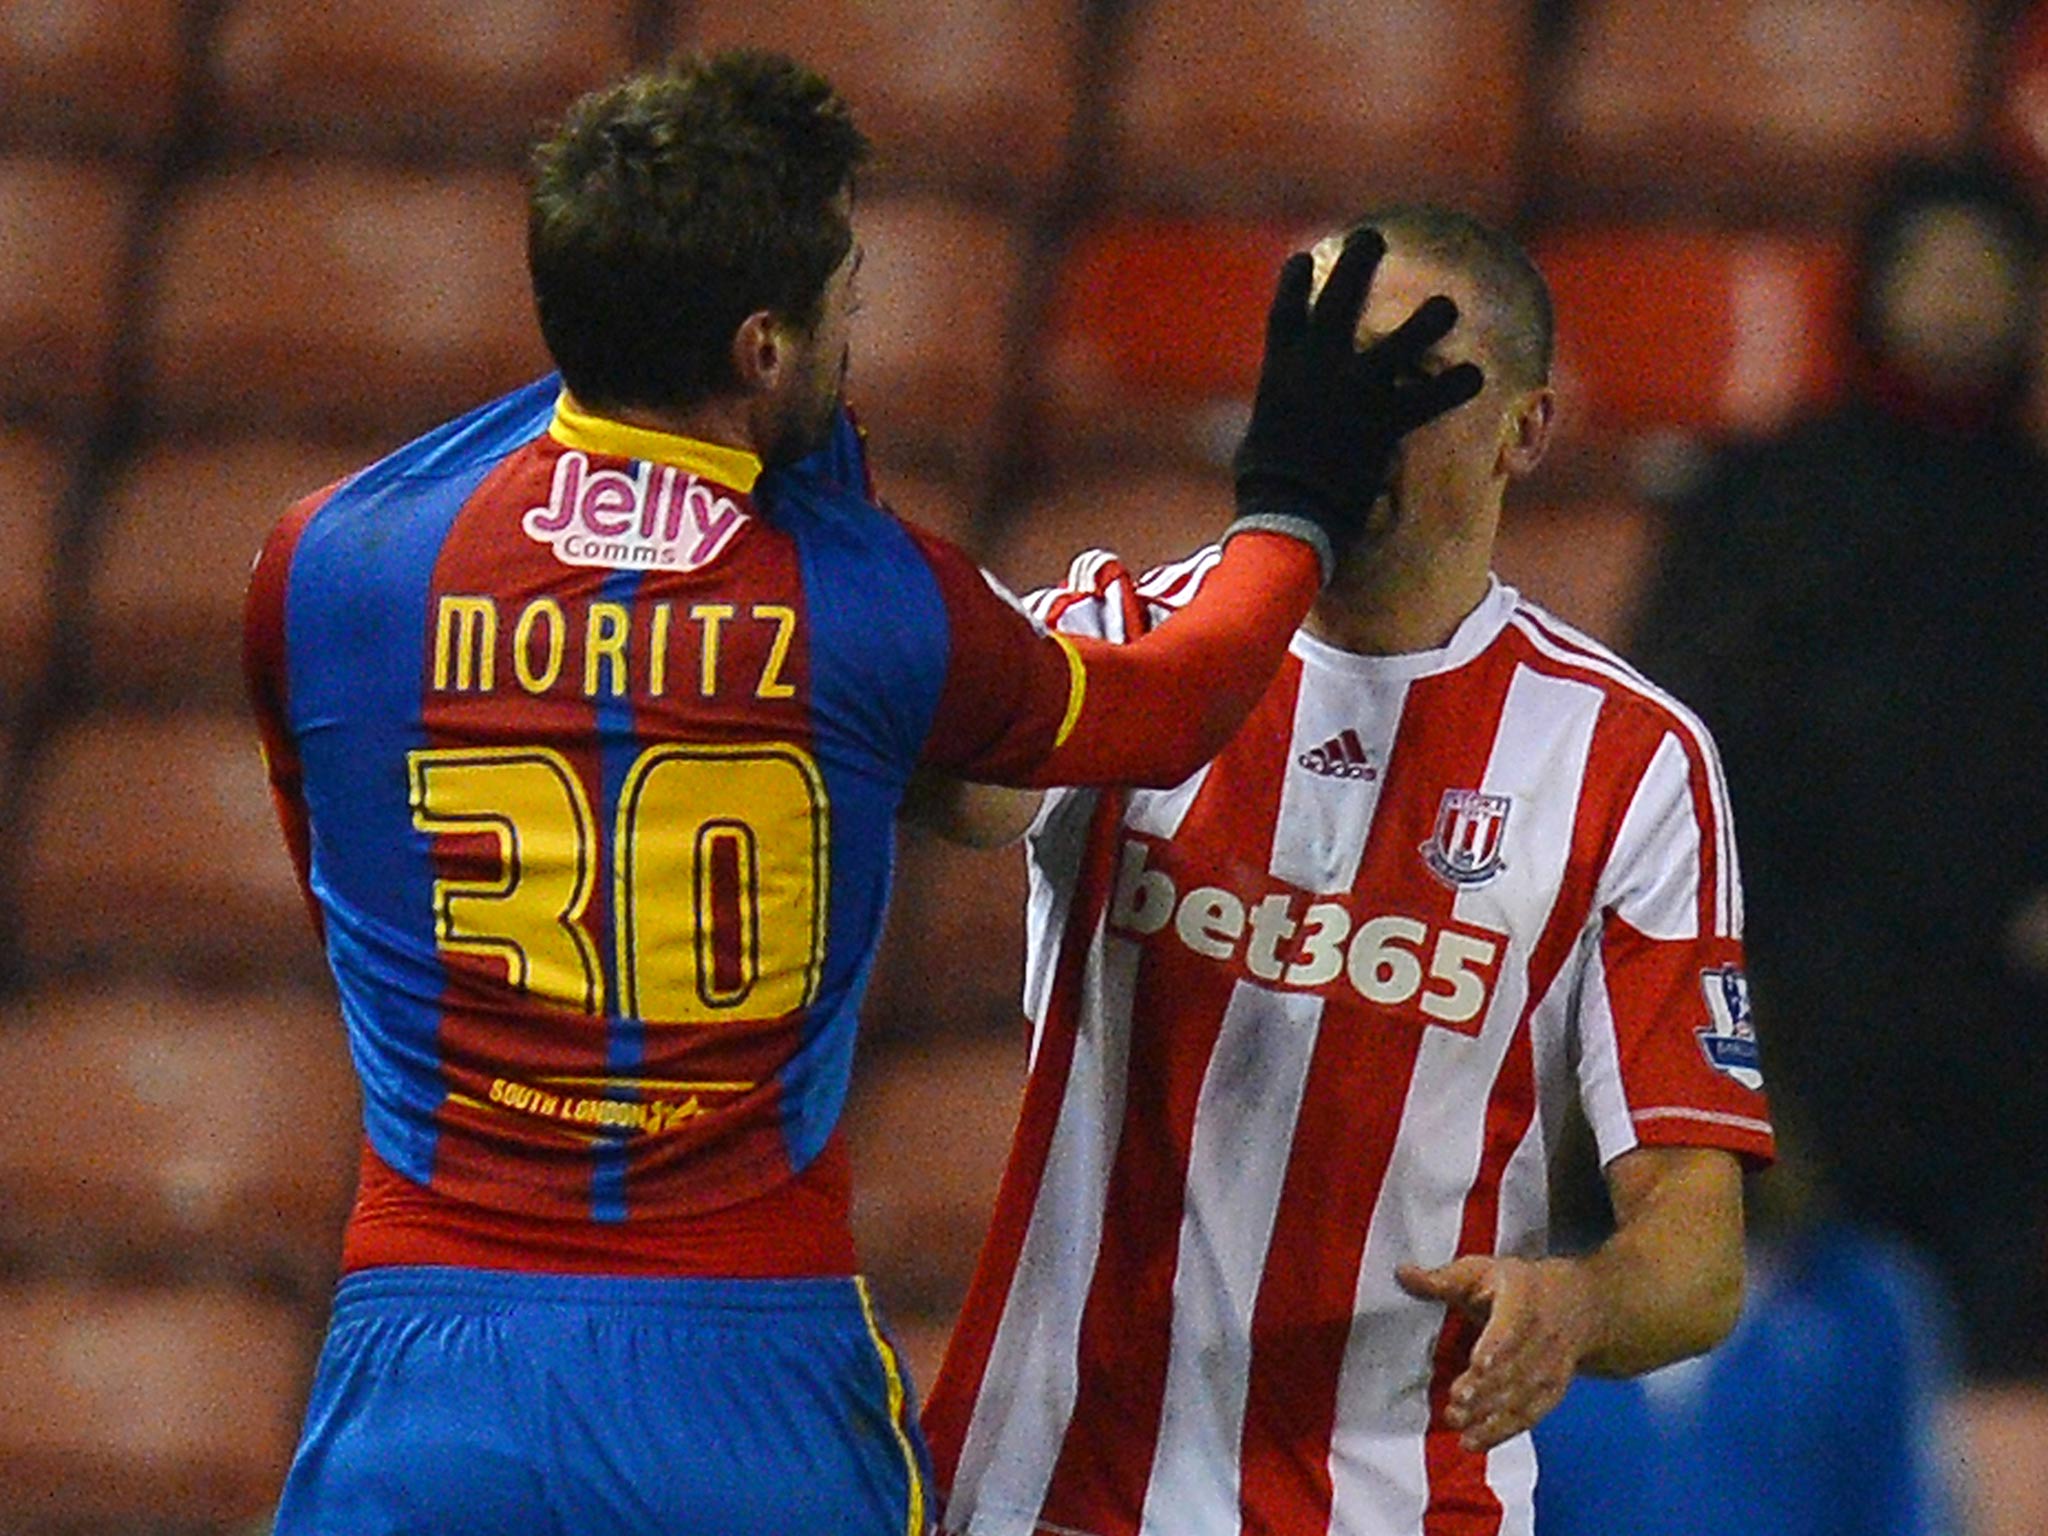 Crystal Palace's midfielder Andre Moritz confronts Stoke City forward Jon Walters